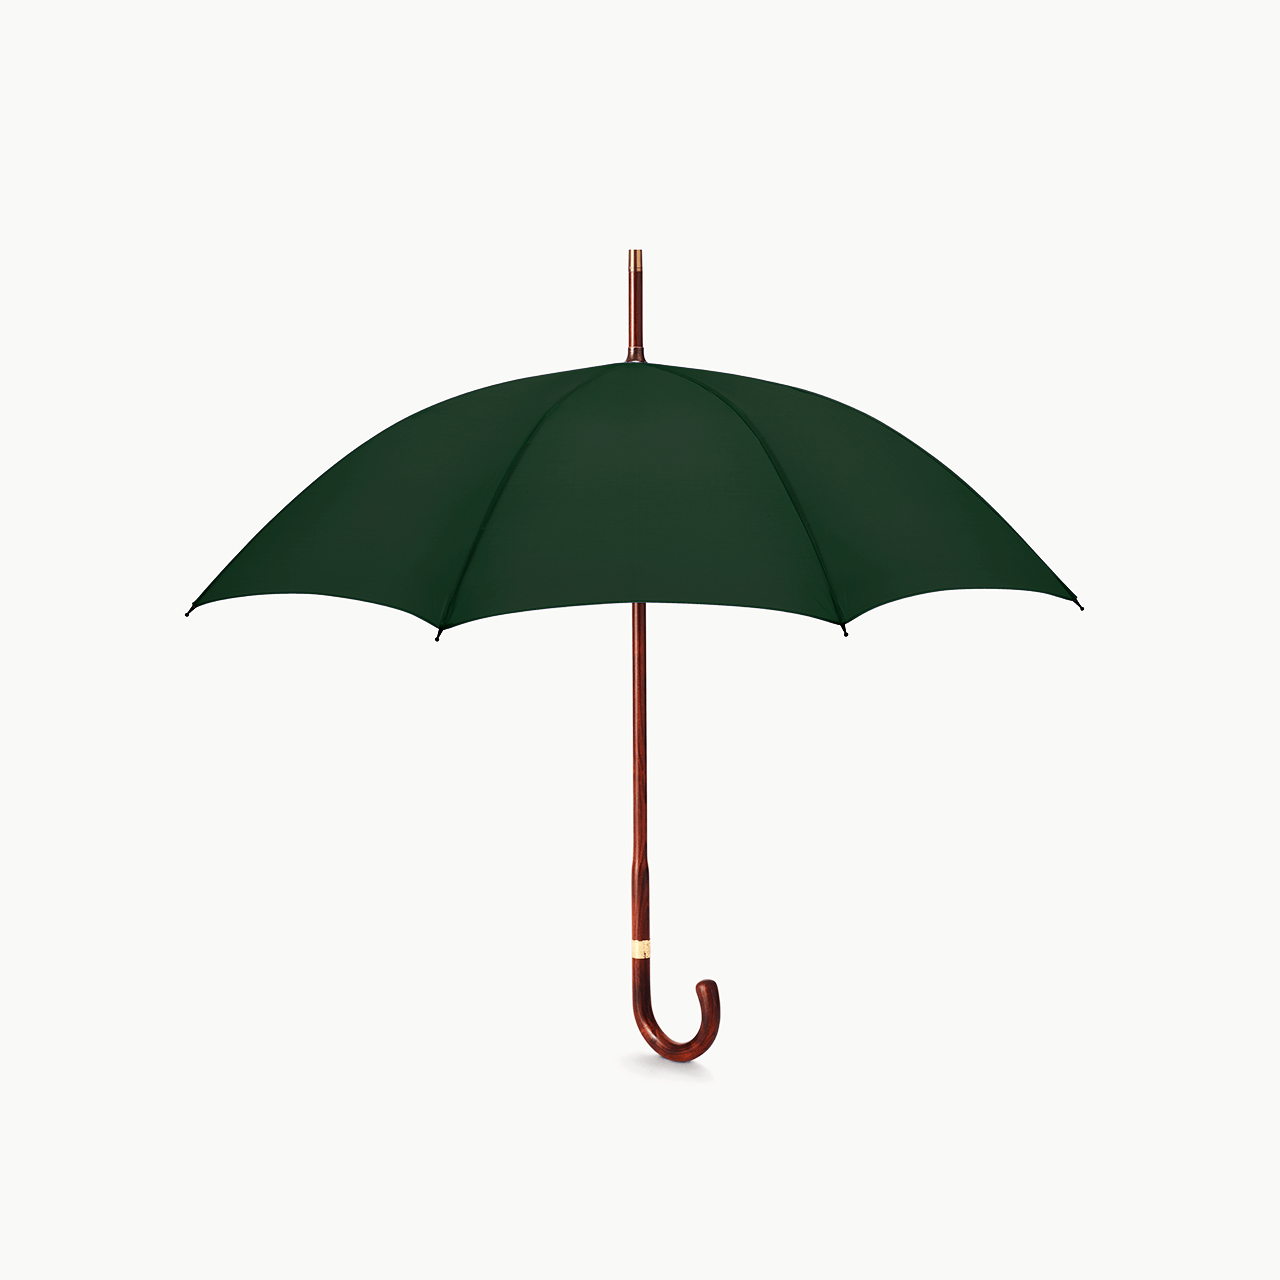 Stripped Cherry Umbrella for Women - Jaguar Green - Swaine